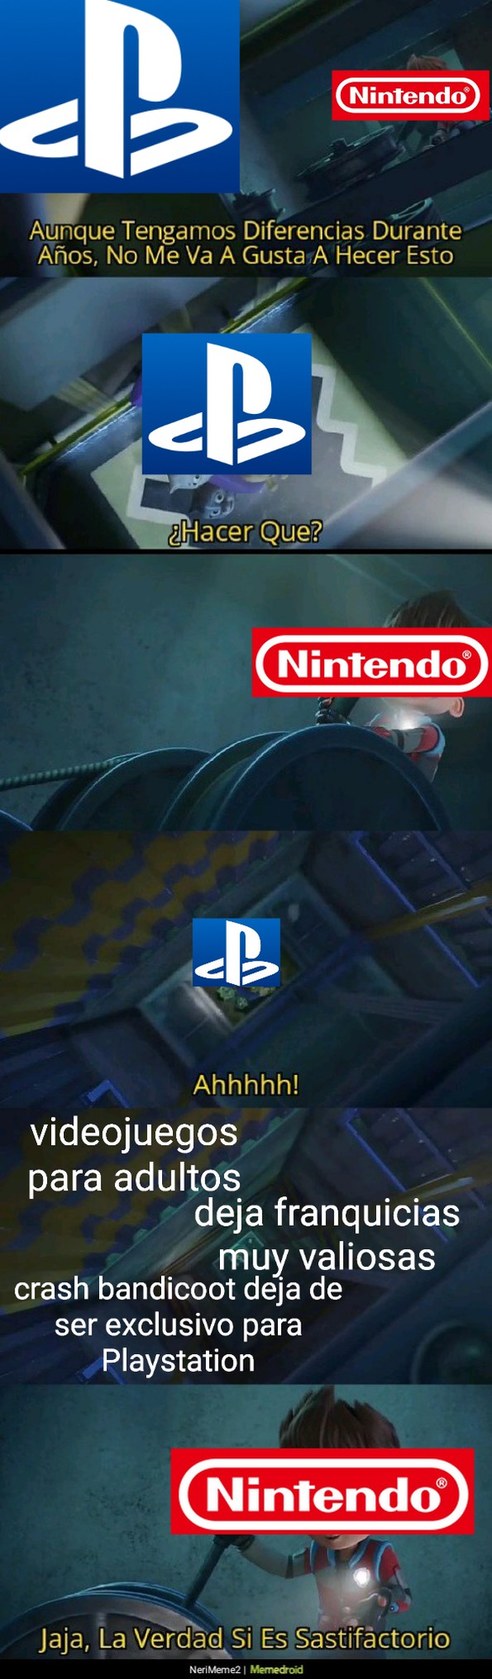 Playstation vs nintendo - meme